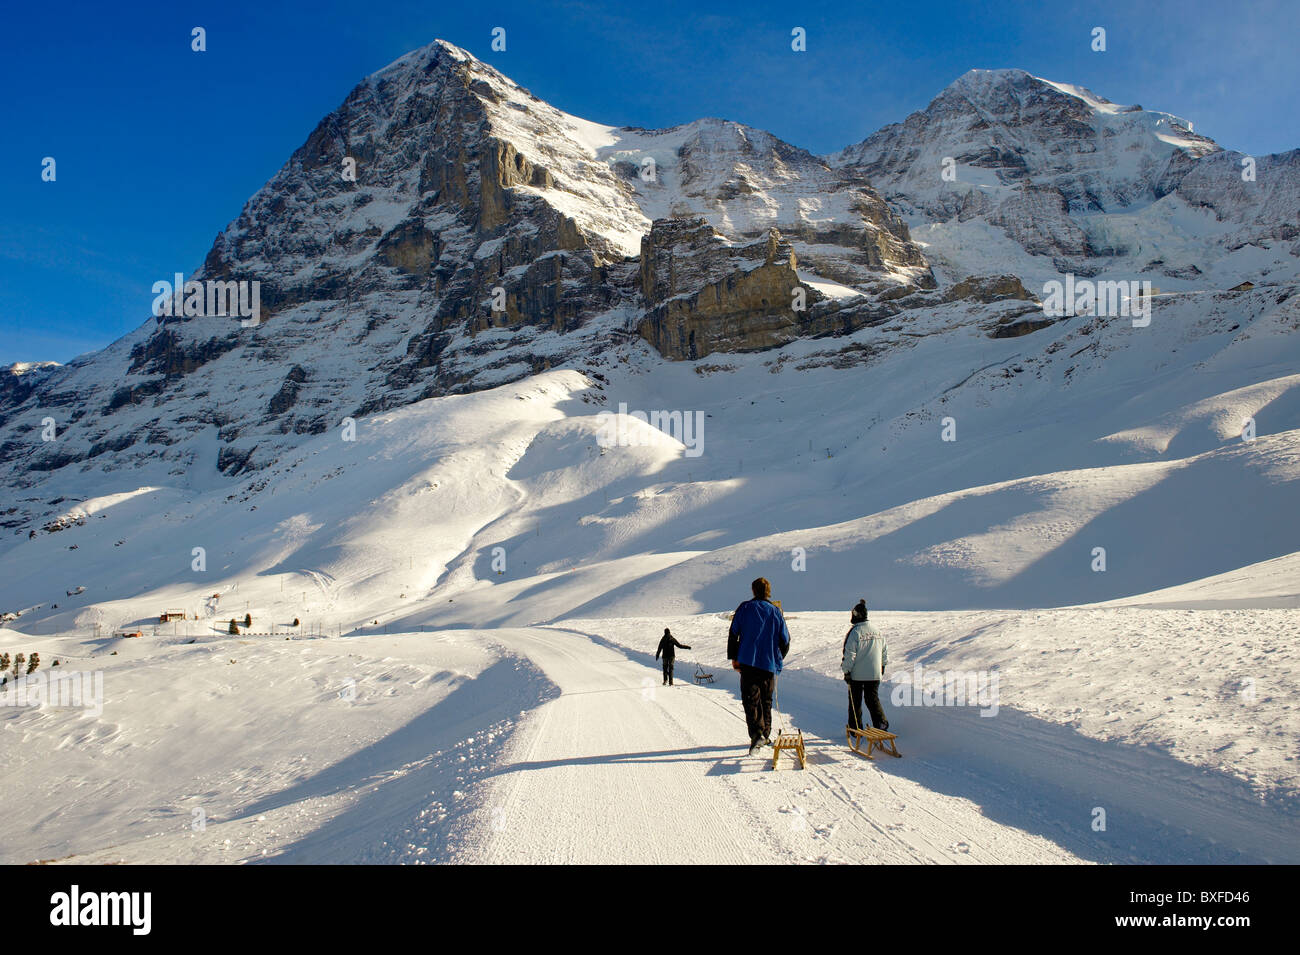 Kleiner Scheidegg in winter looking at The North Face Of the Eiger.. Swiss Alps, Switzerland Stock Photo